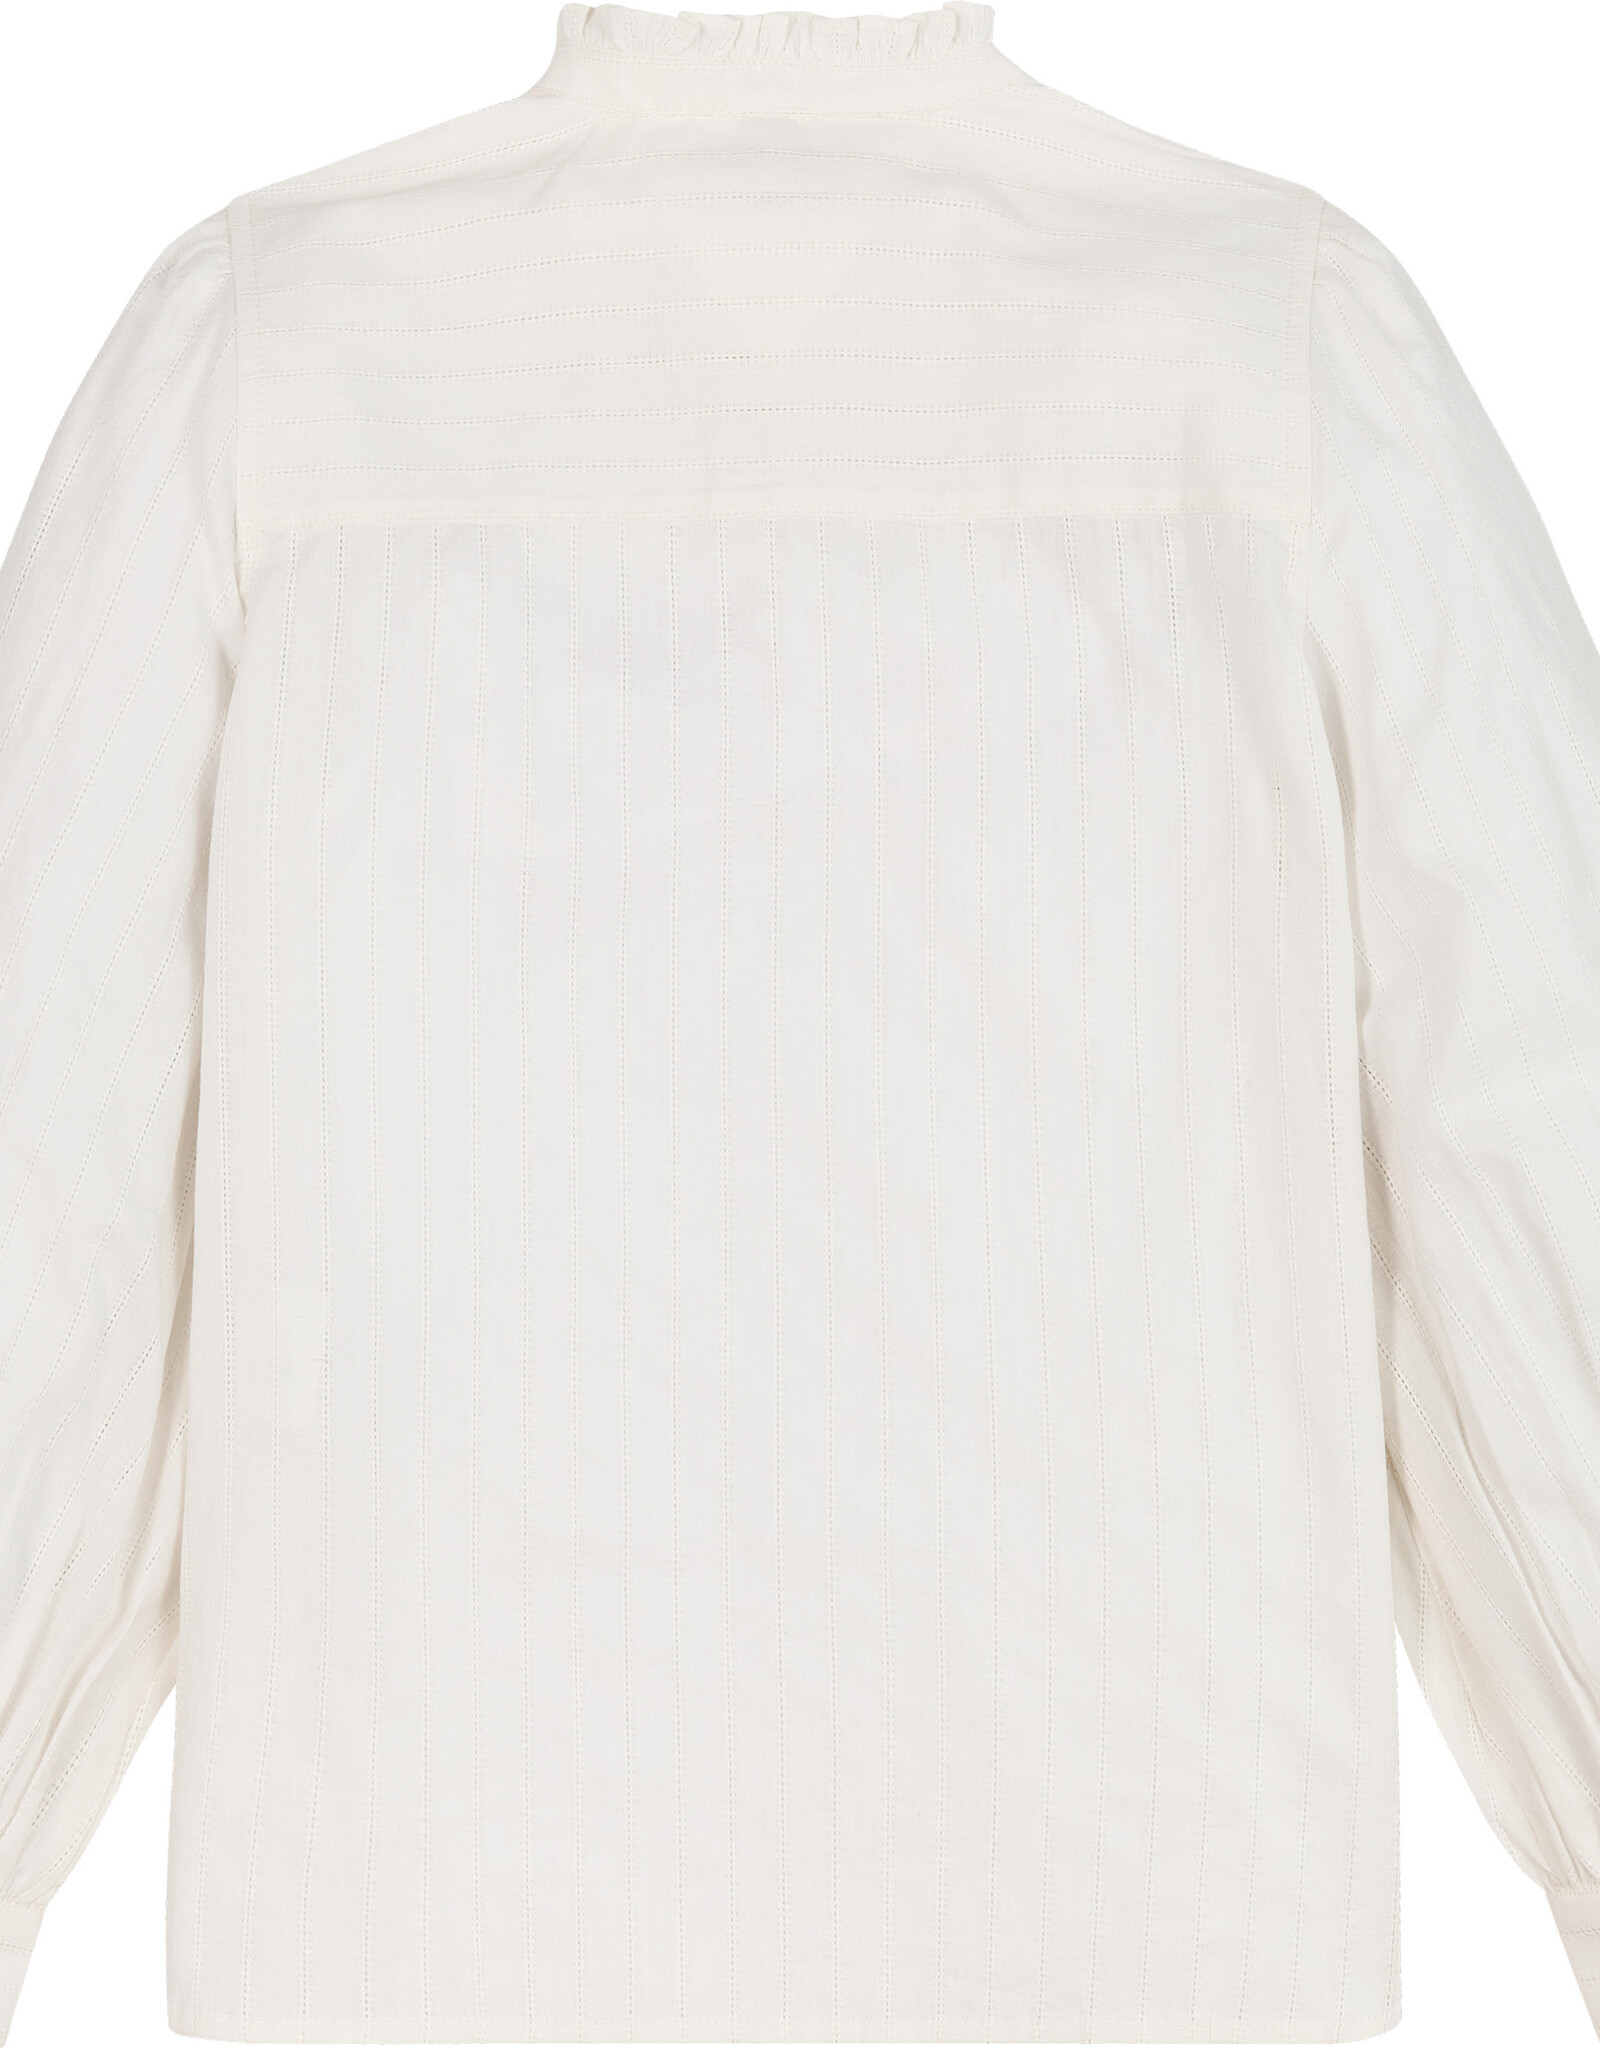 Tommy Hilfiger Ladder Lace Frill Shirt KG0KG07620YBH - Ancient White